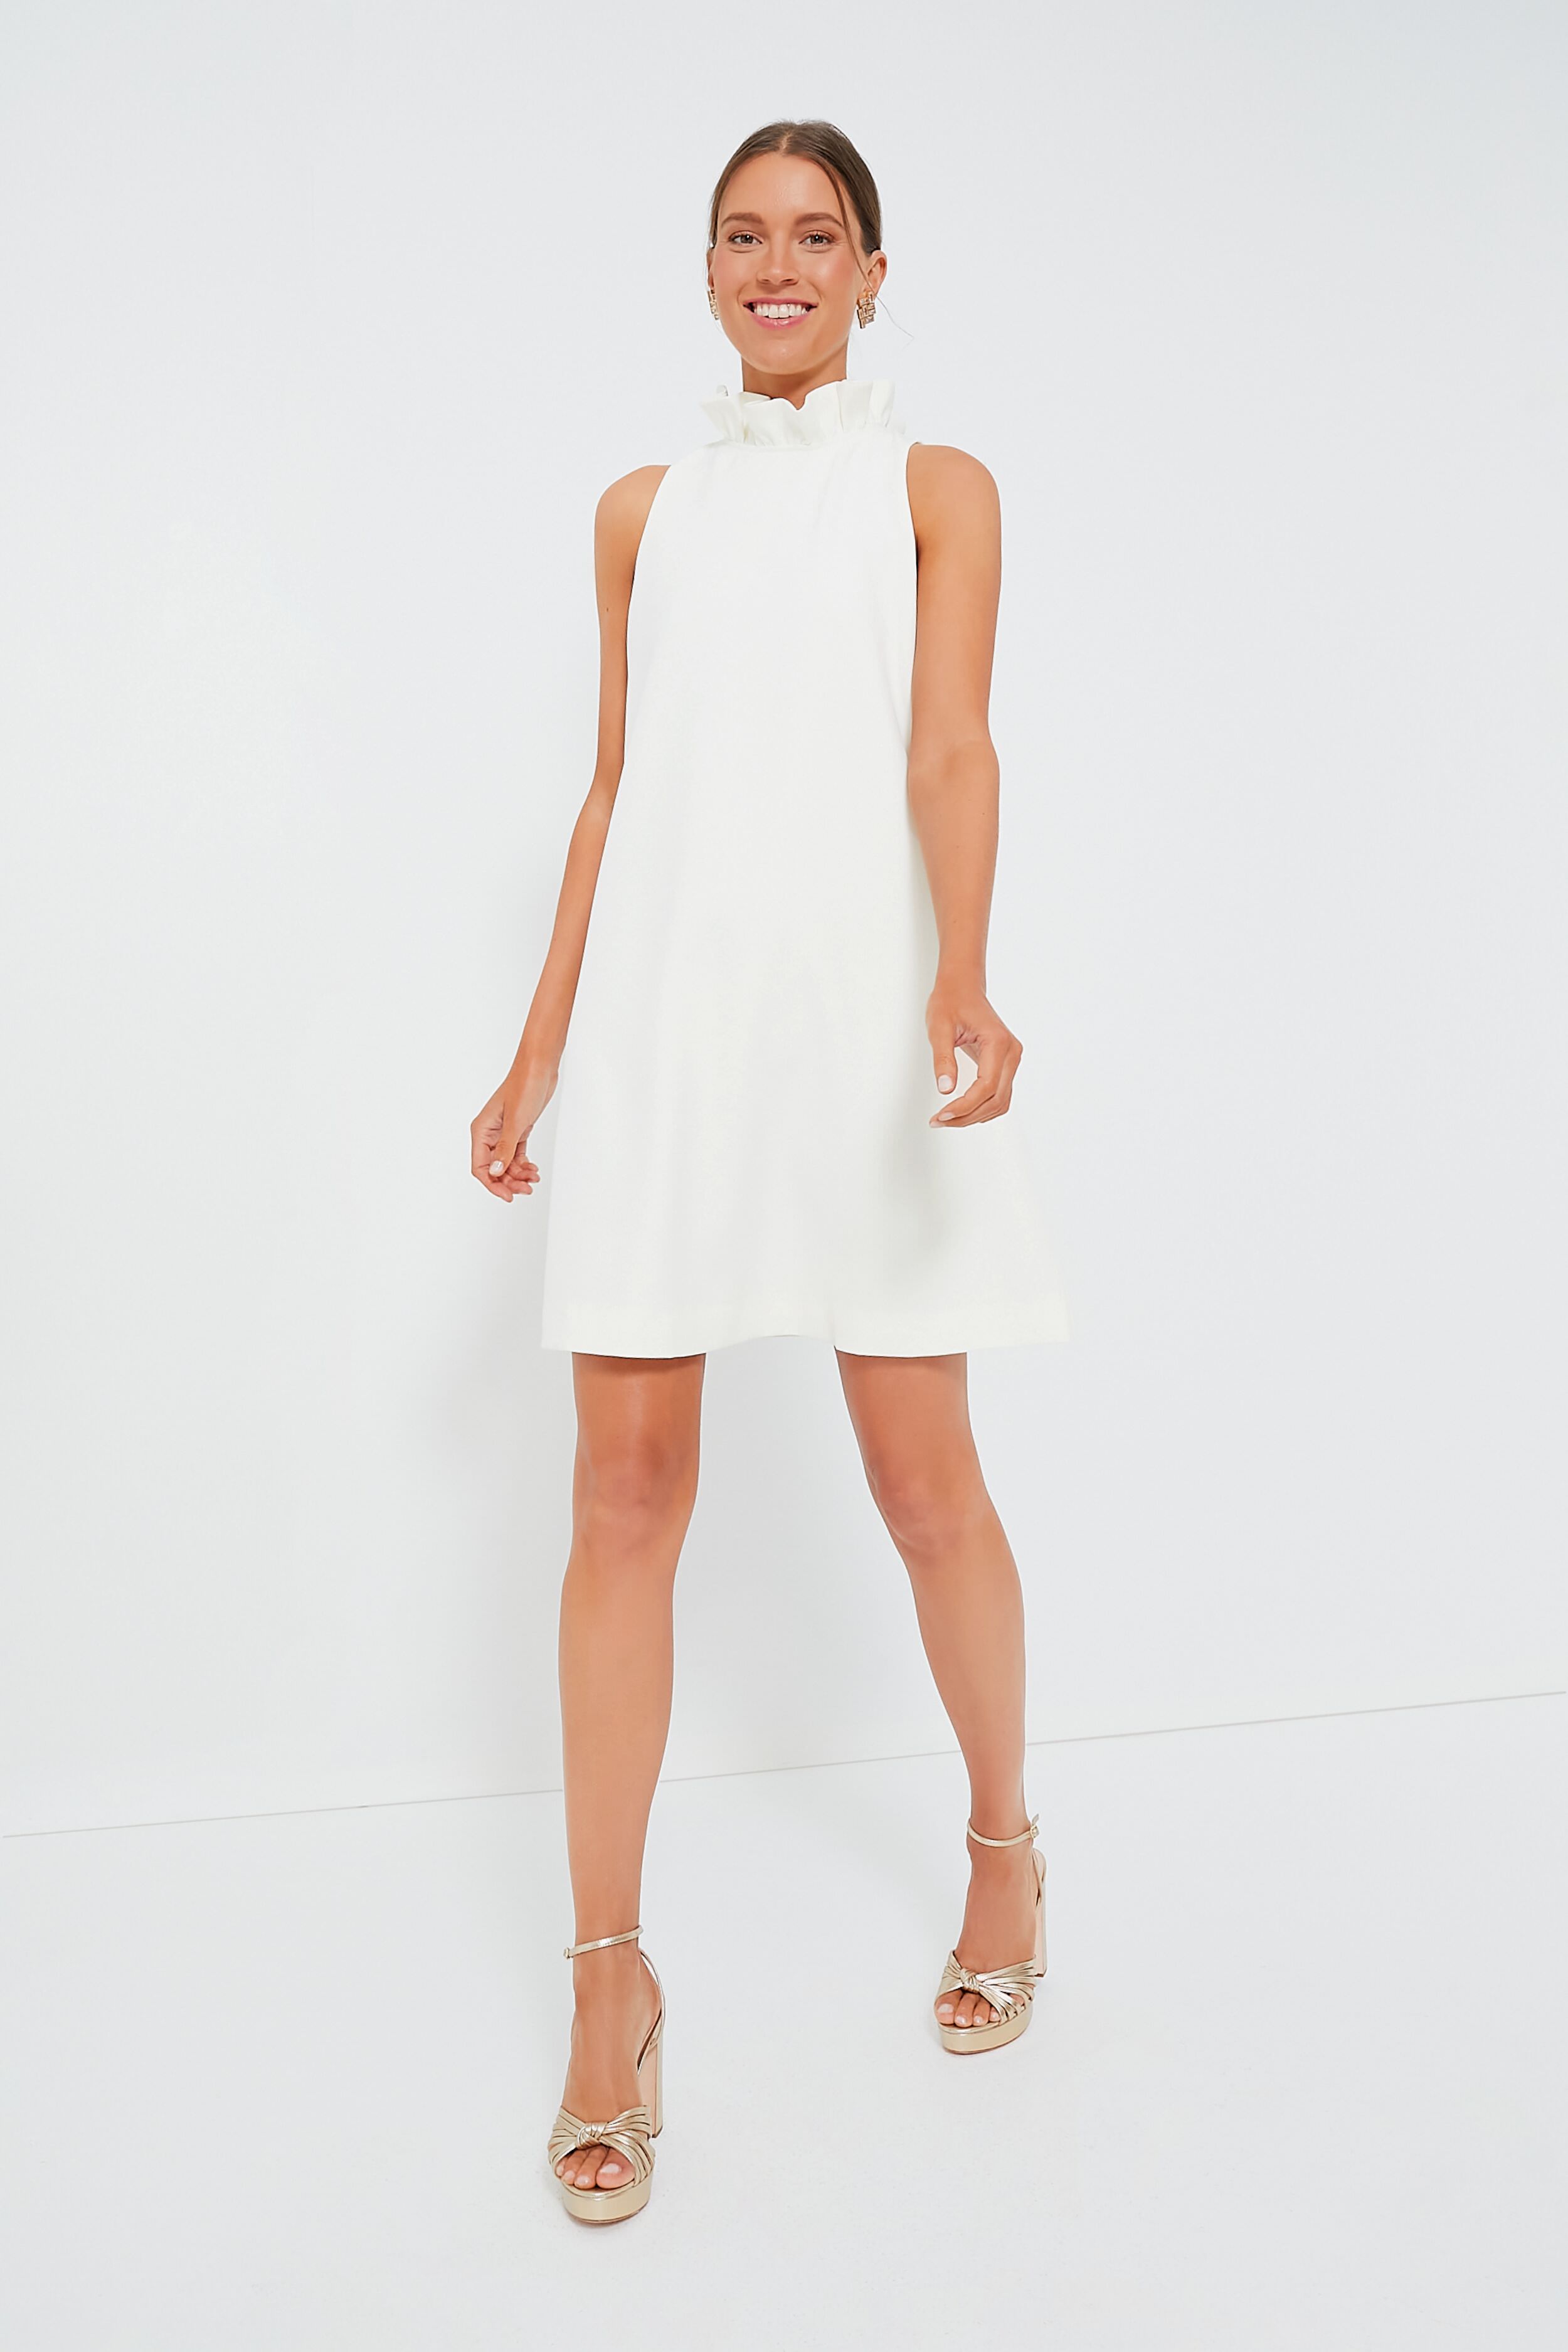 Chic White Dress - Shirt Dress - Button-Up Dress - White Collared Dress -  $43.00 - Lulus